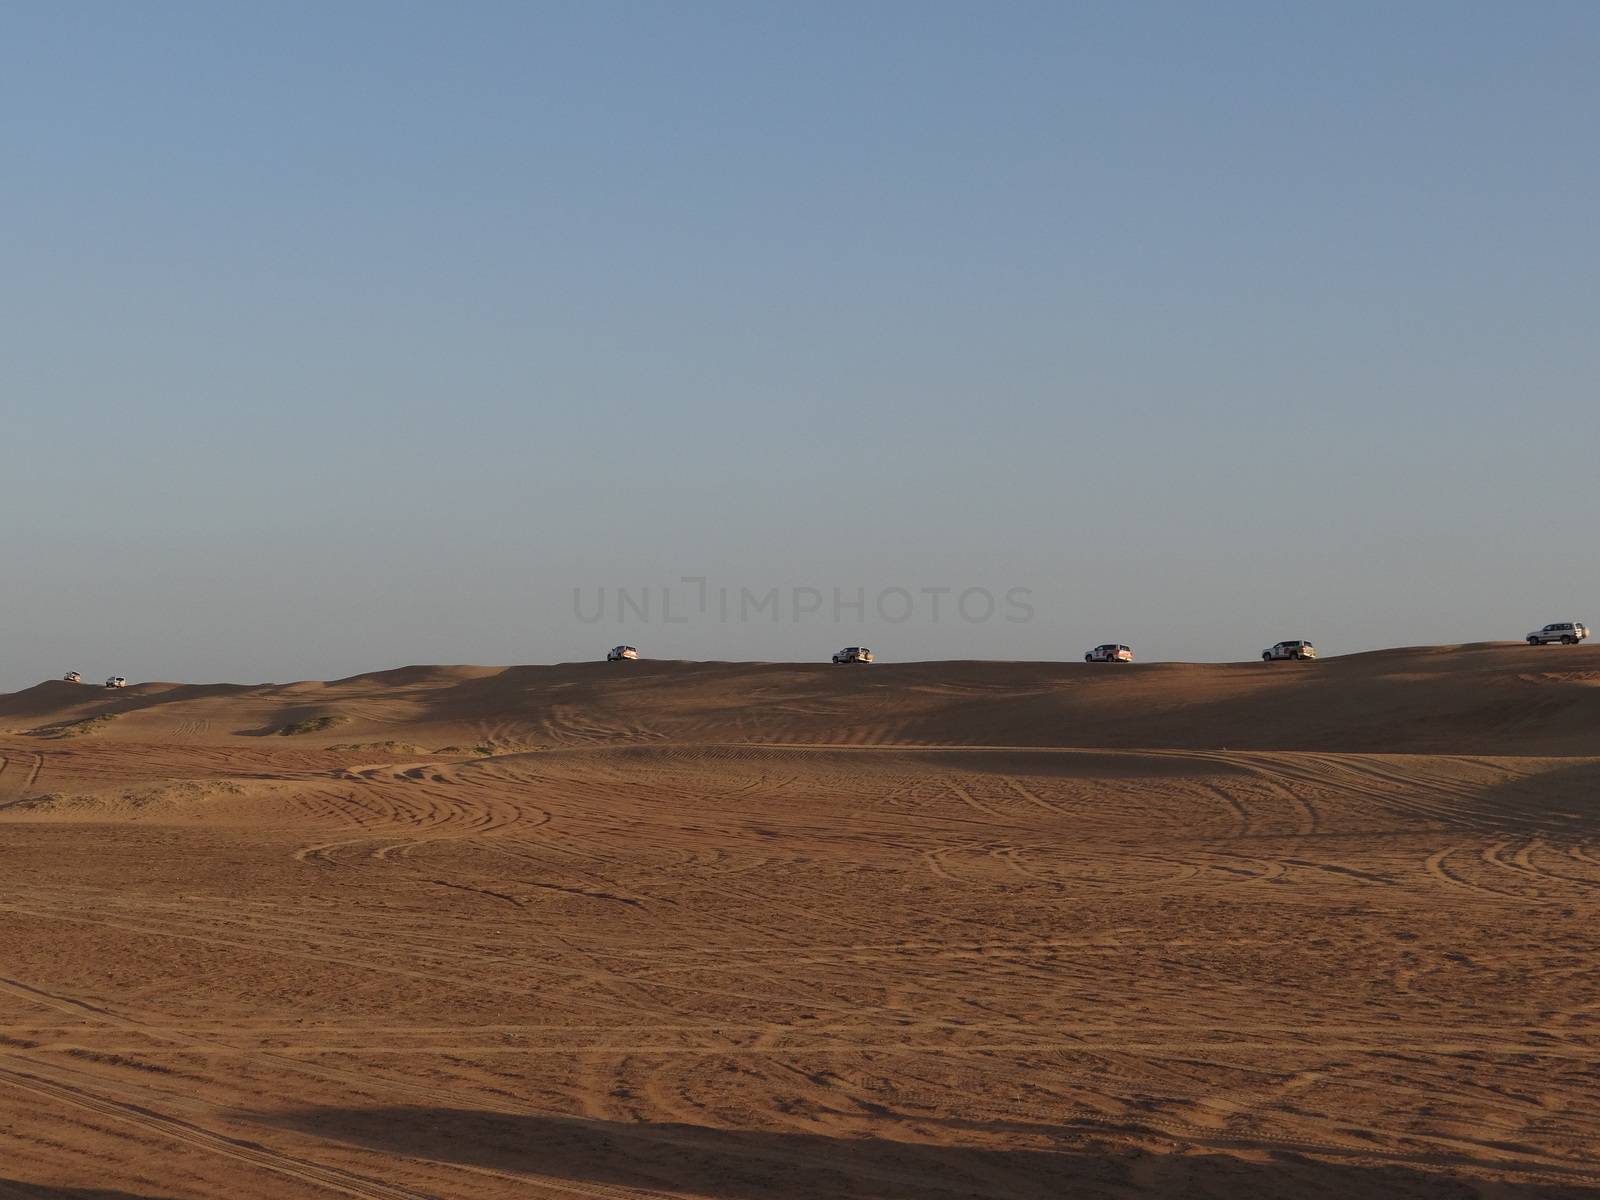 visiting the Arabian desert by gswagh71